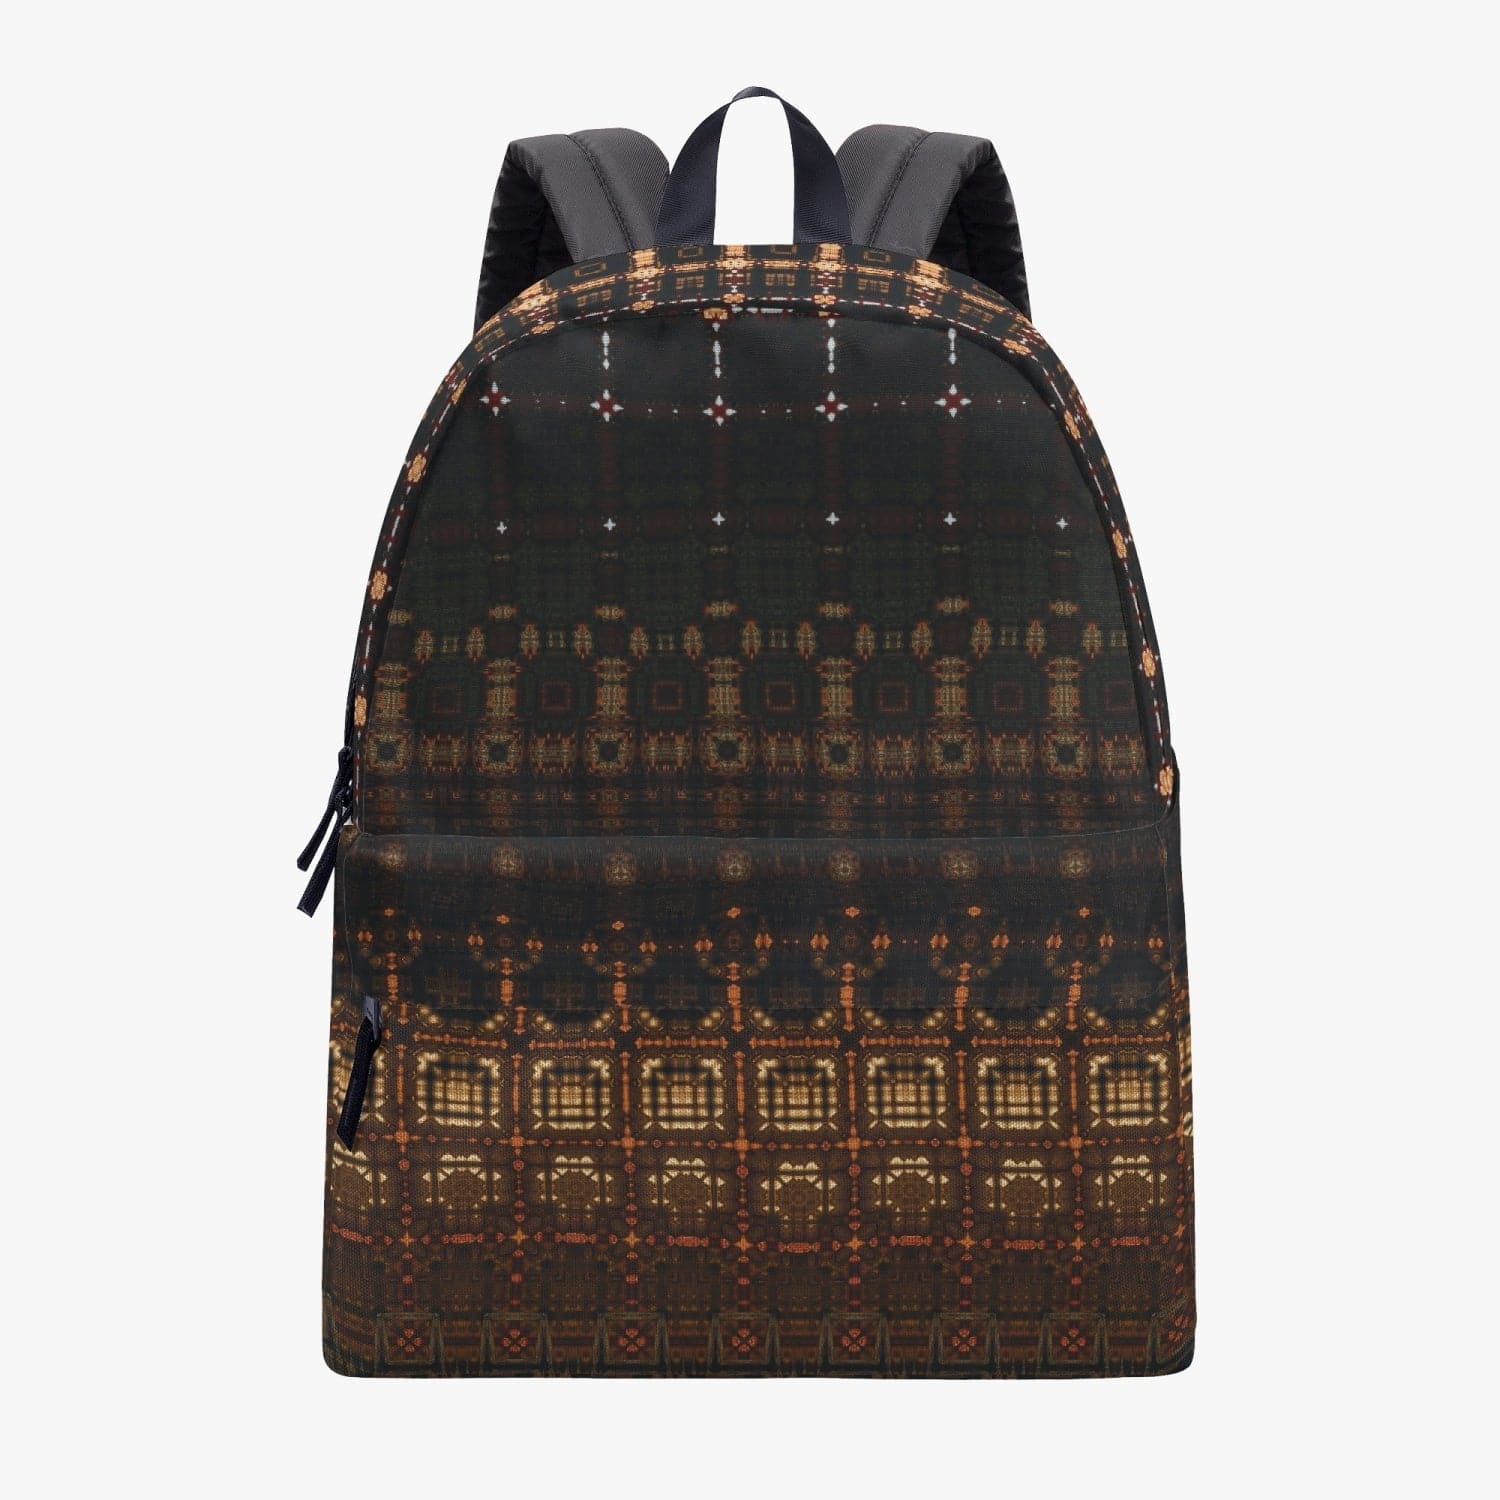 Dark brown red and orange pattern Cotton Canvas Backpack, by Sensus Studio Design